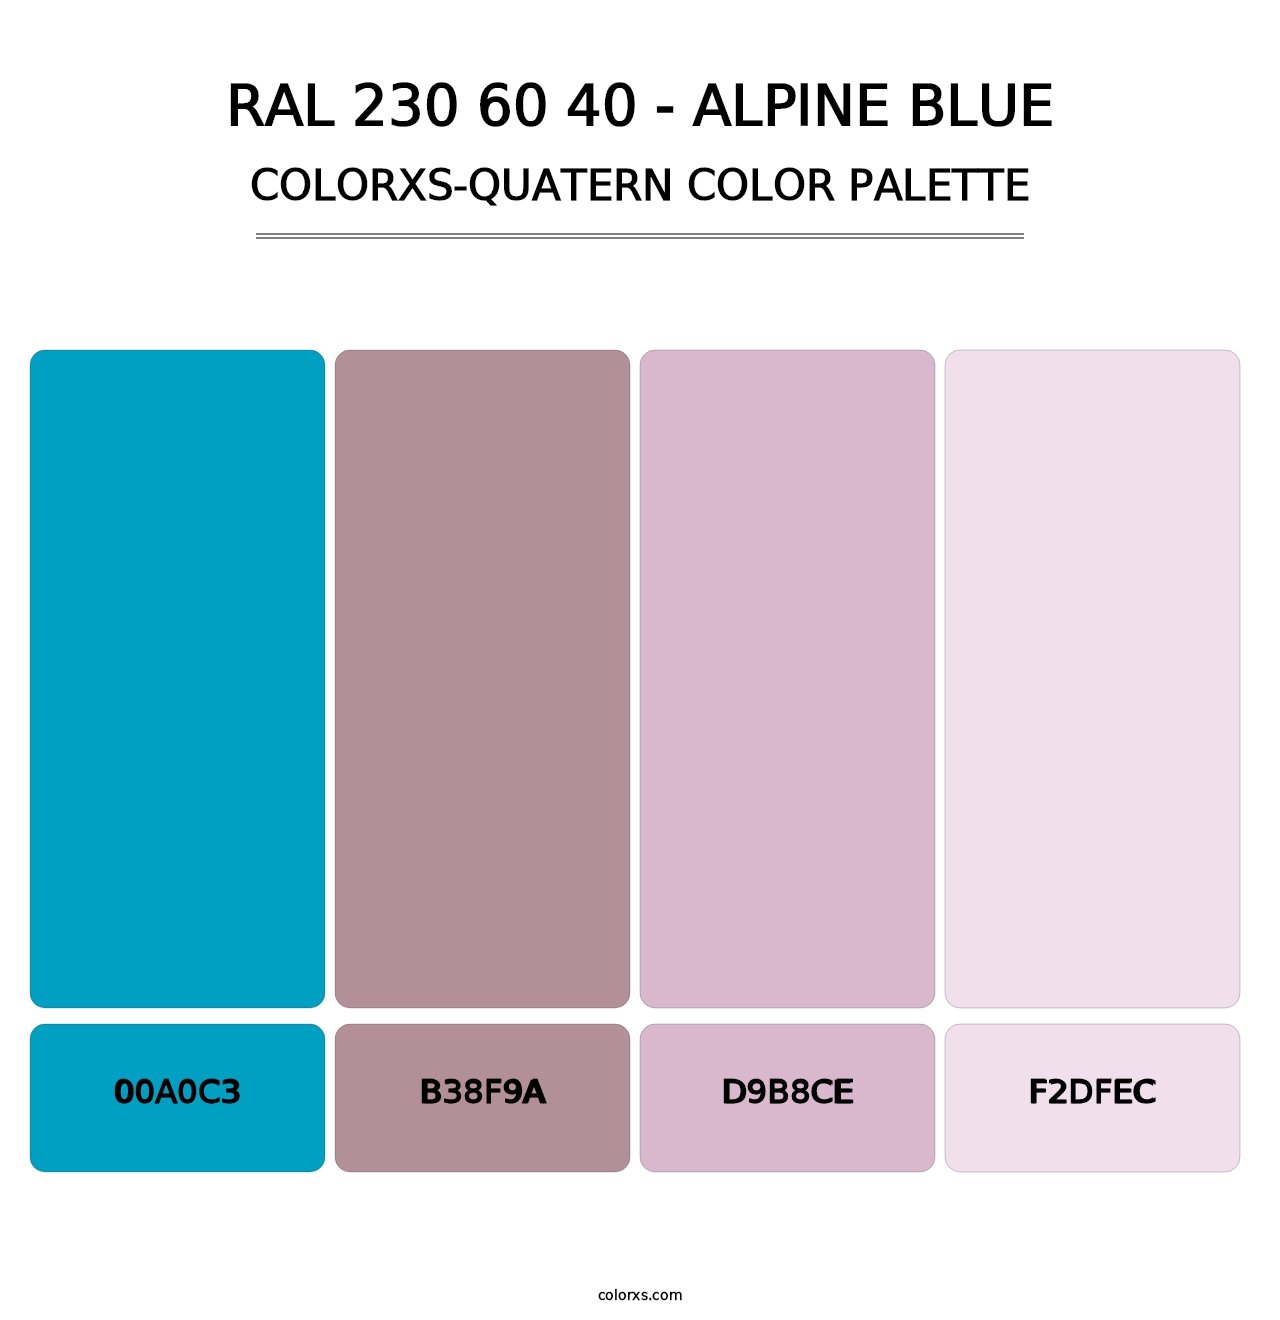 RAL 230 60 40 - Alpine Blue - Colorxs Quatern Palette